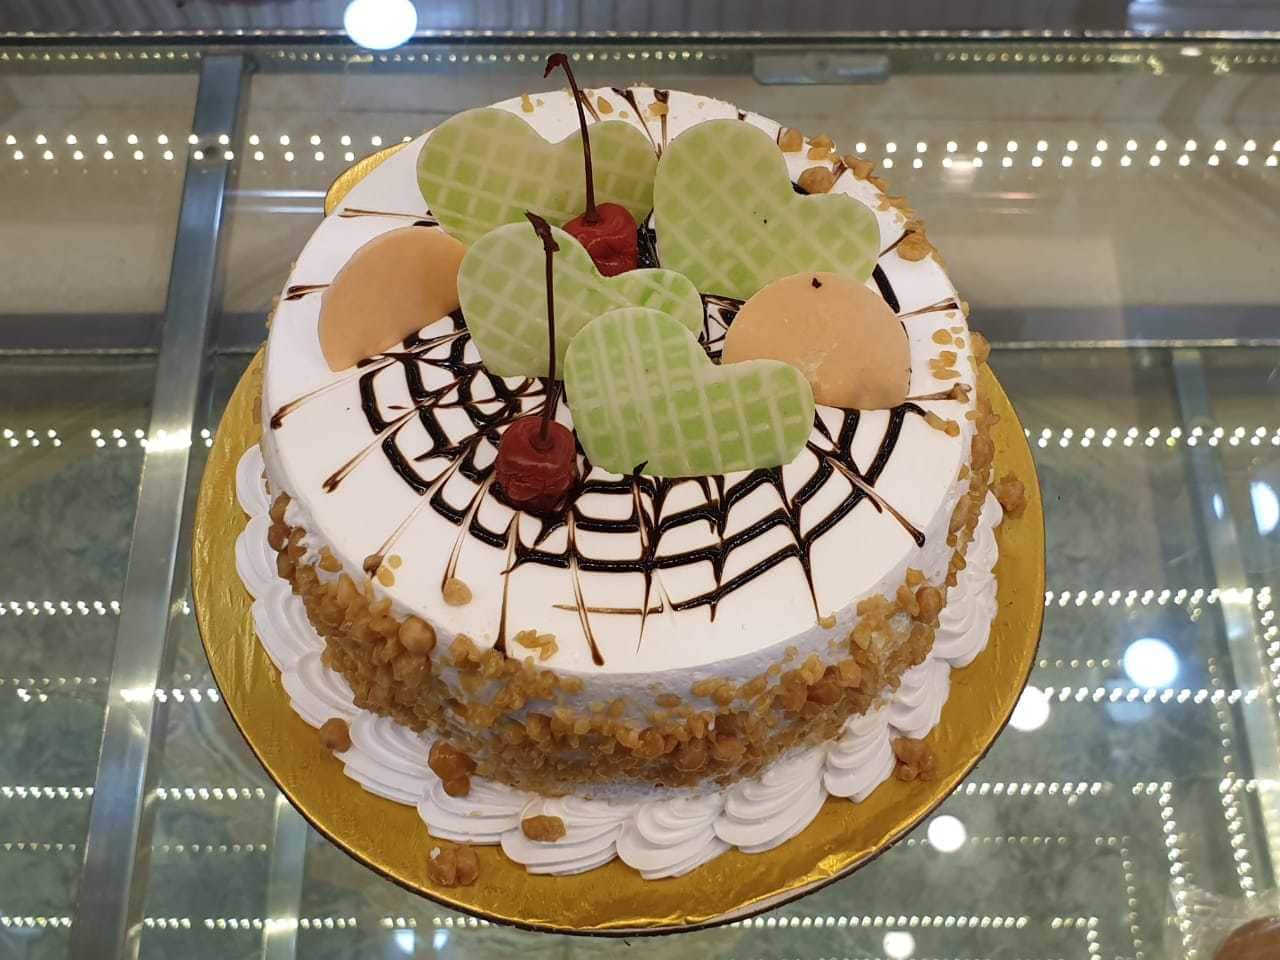 24 Hour Cake in Sohna Road,Delhi - Order Food Online - Best Bakeries in  Delhi - Justdial